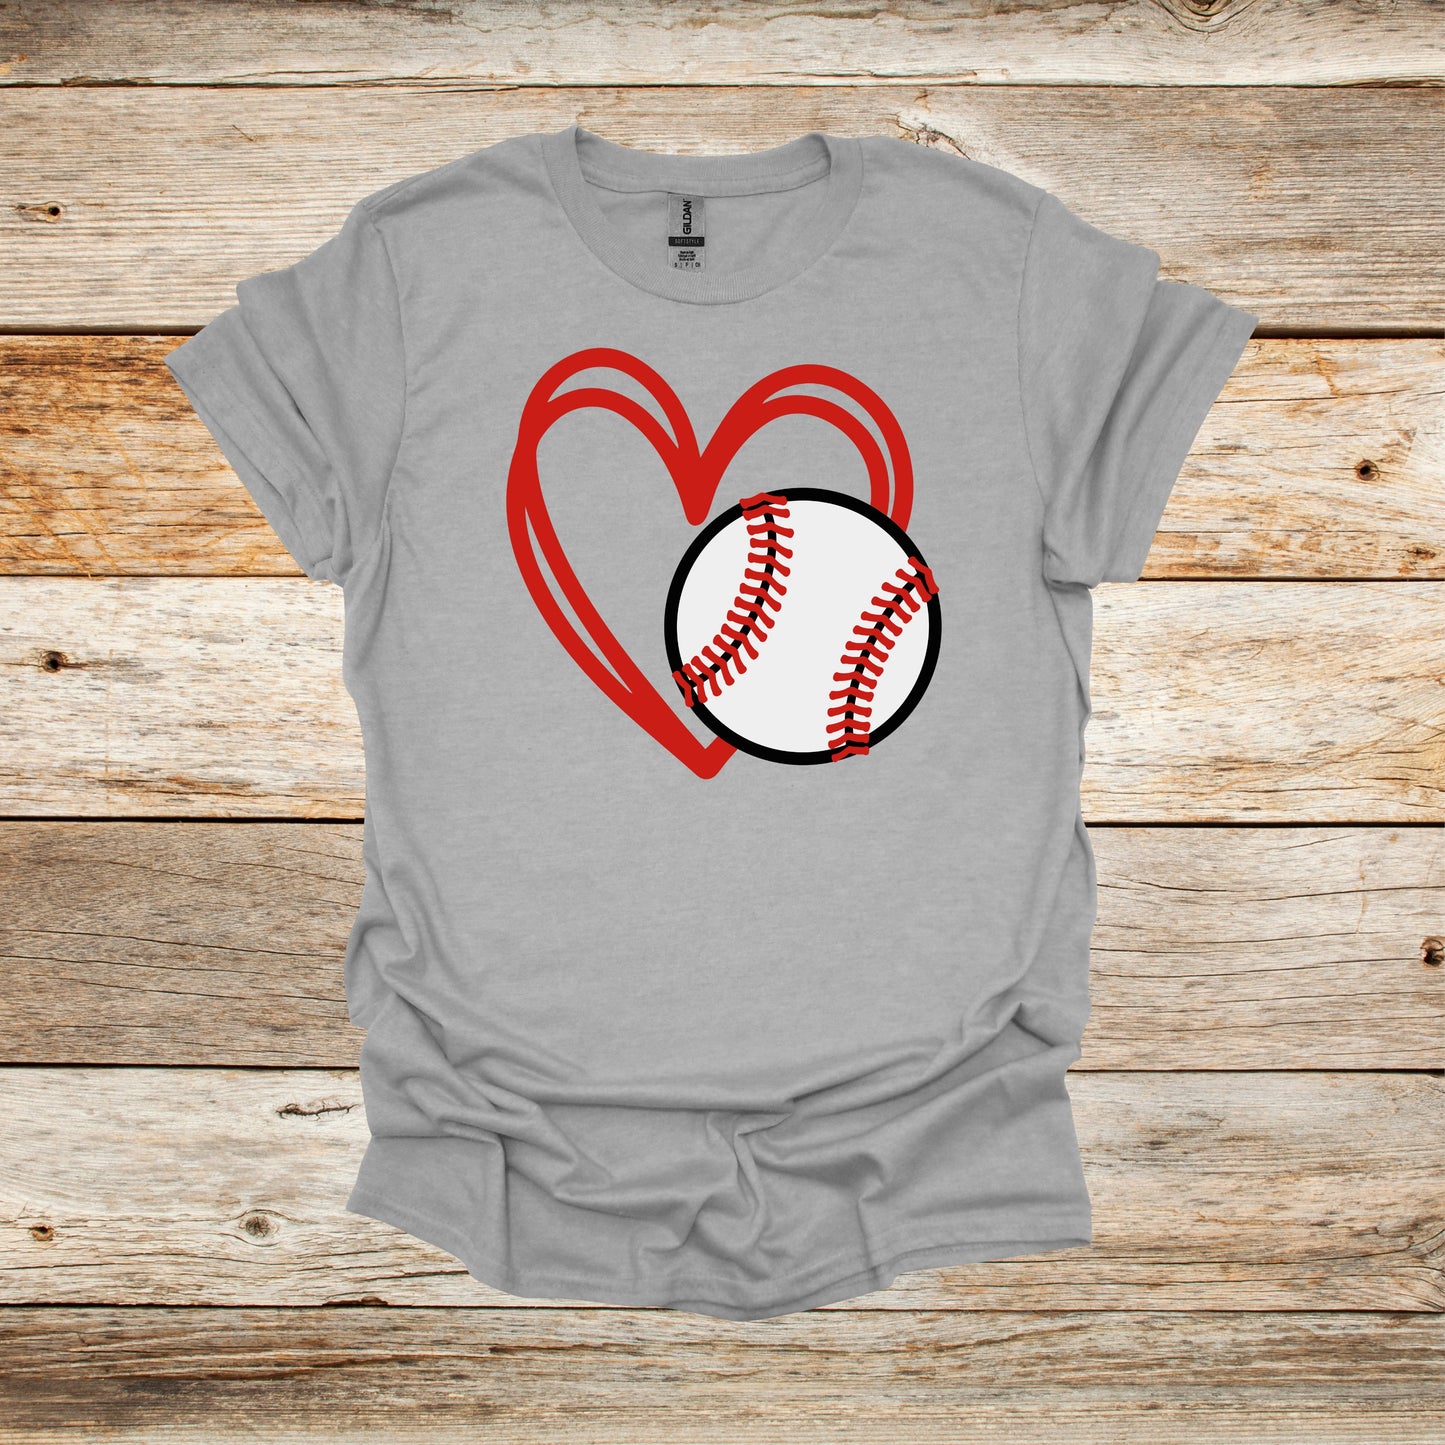 Baseball T-Shirt - Heart Baseball - Adult and Children's Tee Shirts - Sports T-Shirts Graphic Avenue Sport Grey Adult Small 